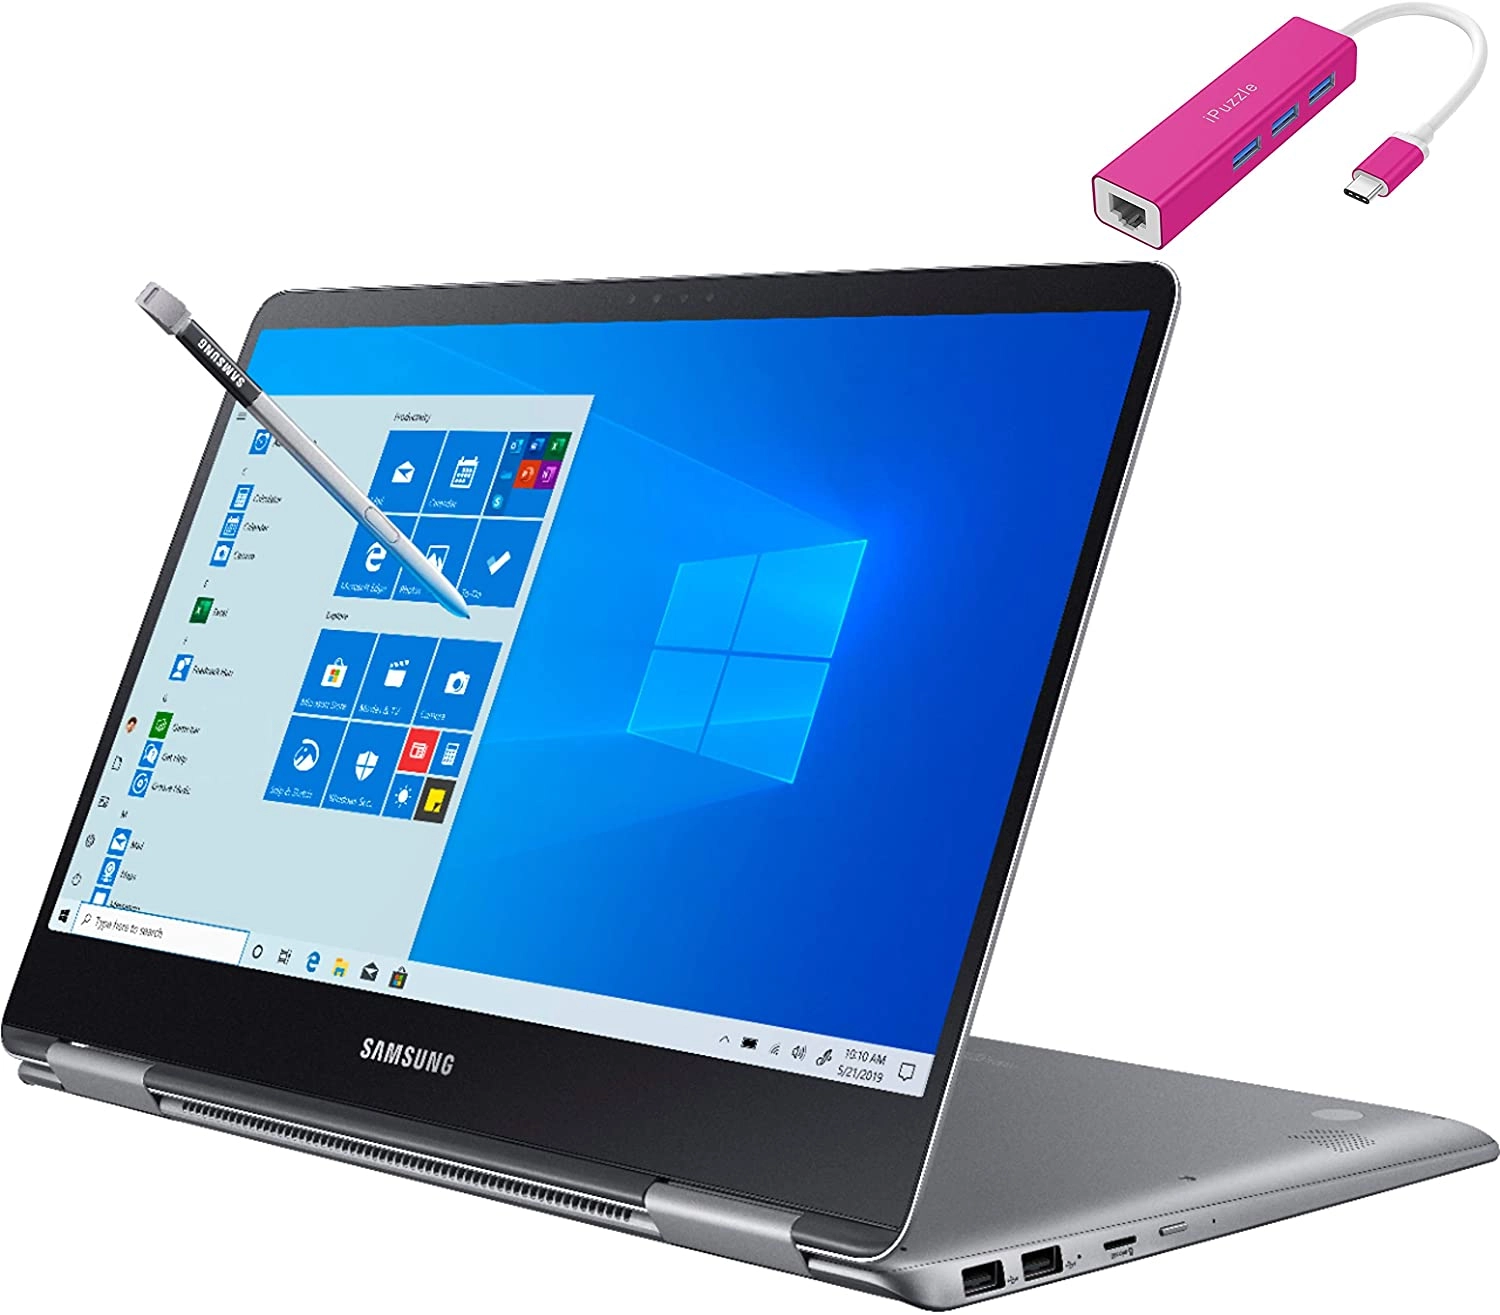 Samsung Notebook laptop image